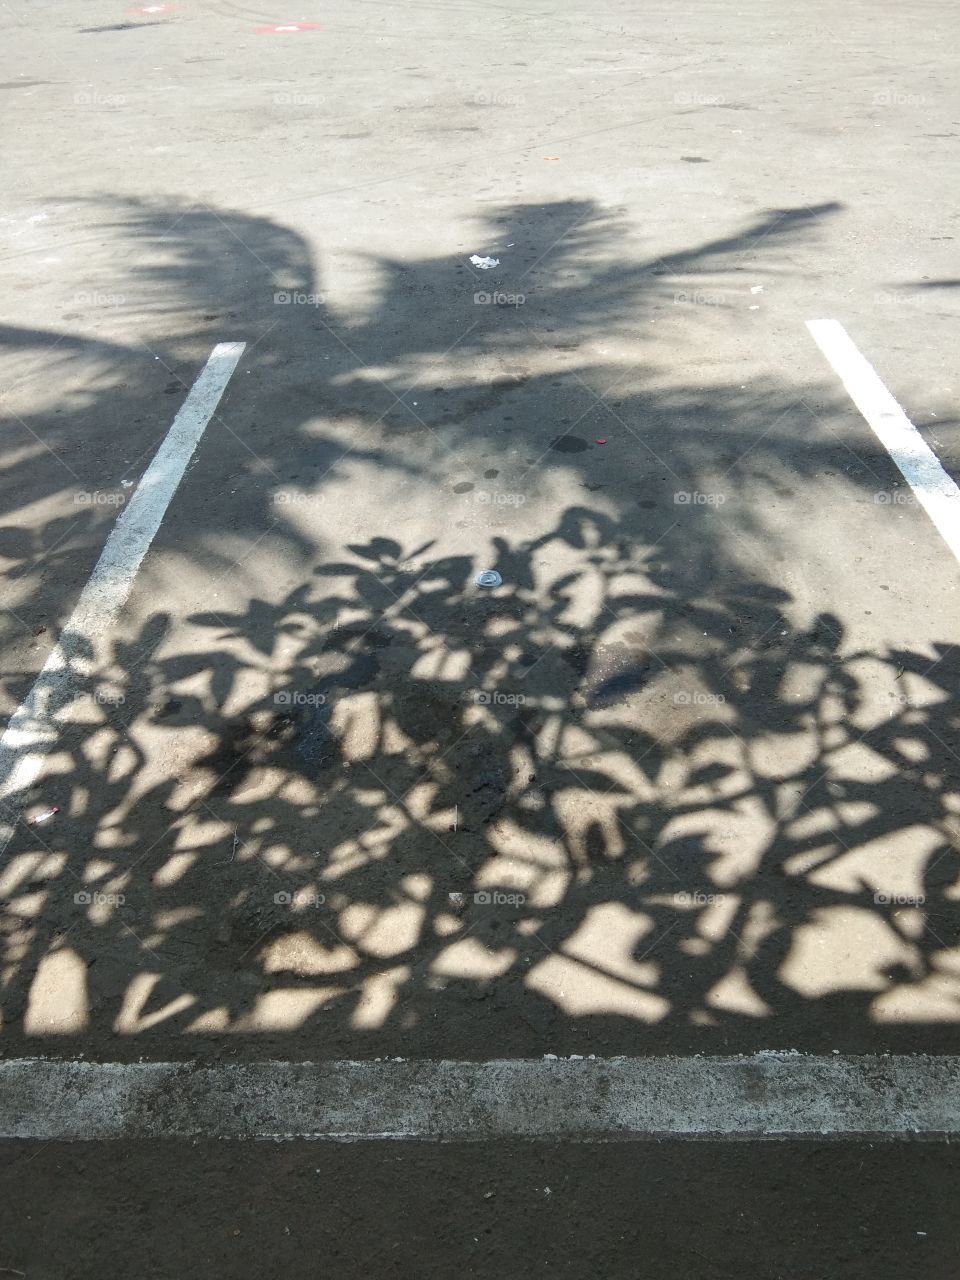 shadows of coconut trees and frangipani